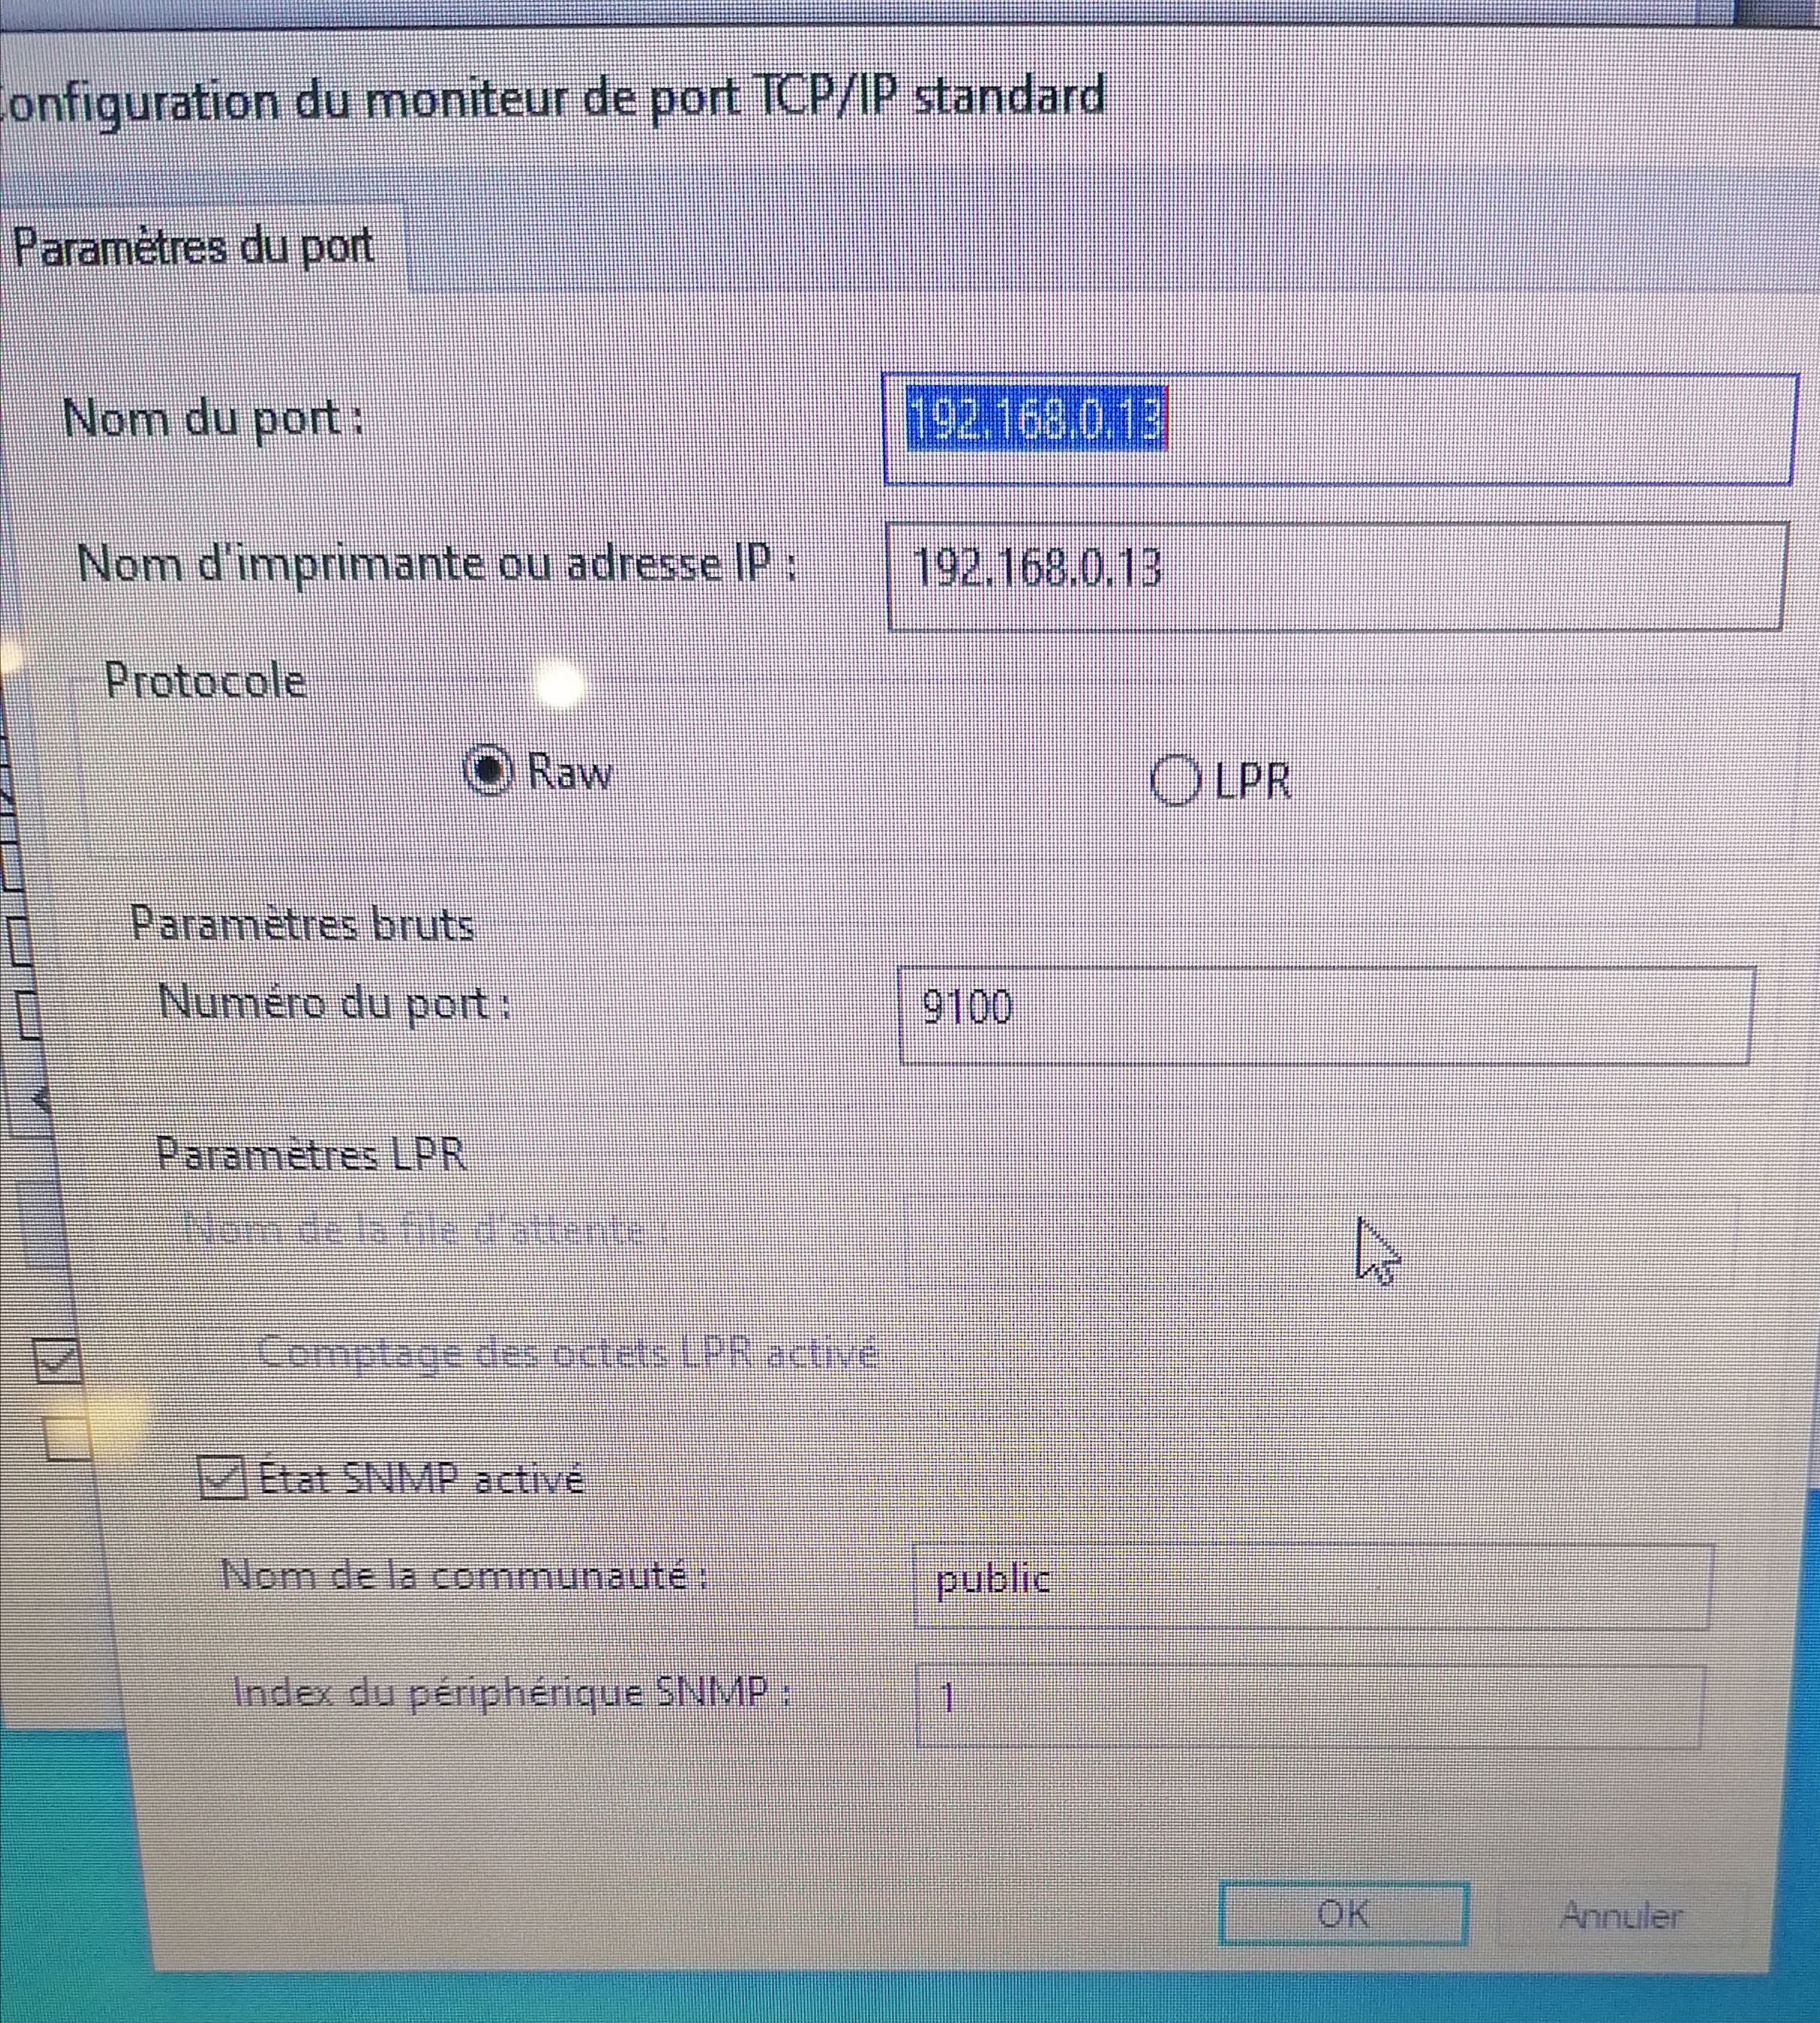 Problème connexion wifi - HP Support Community - 7445973